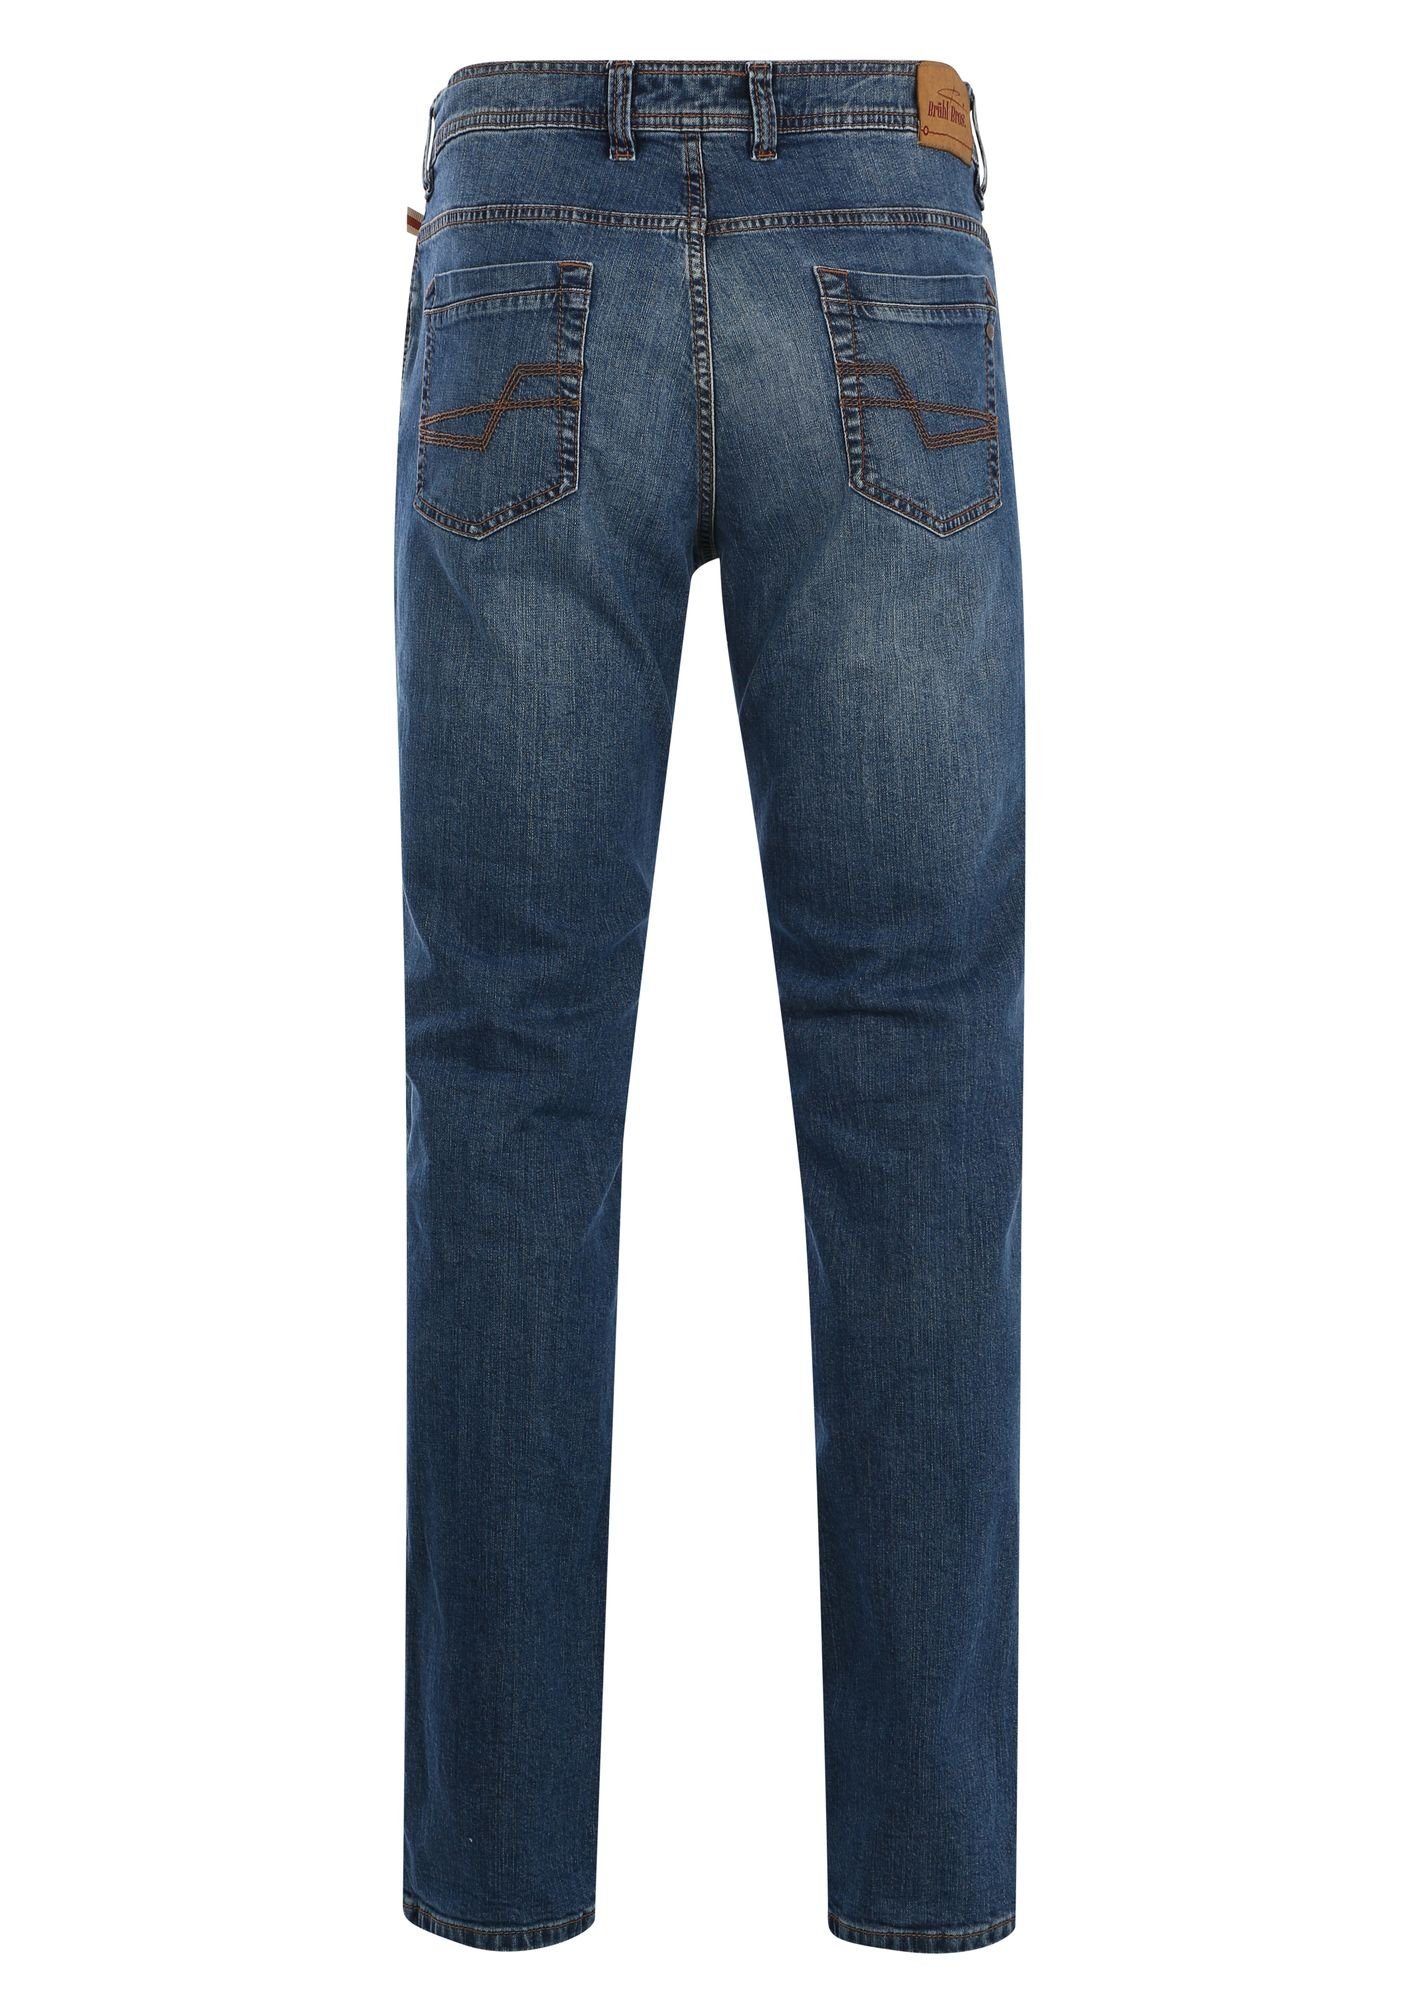 Toronto Brühl 2 5-Pocket-Jeans bluescraping